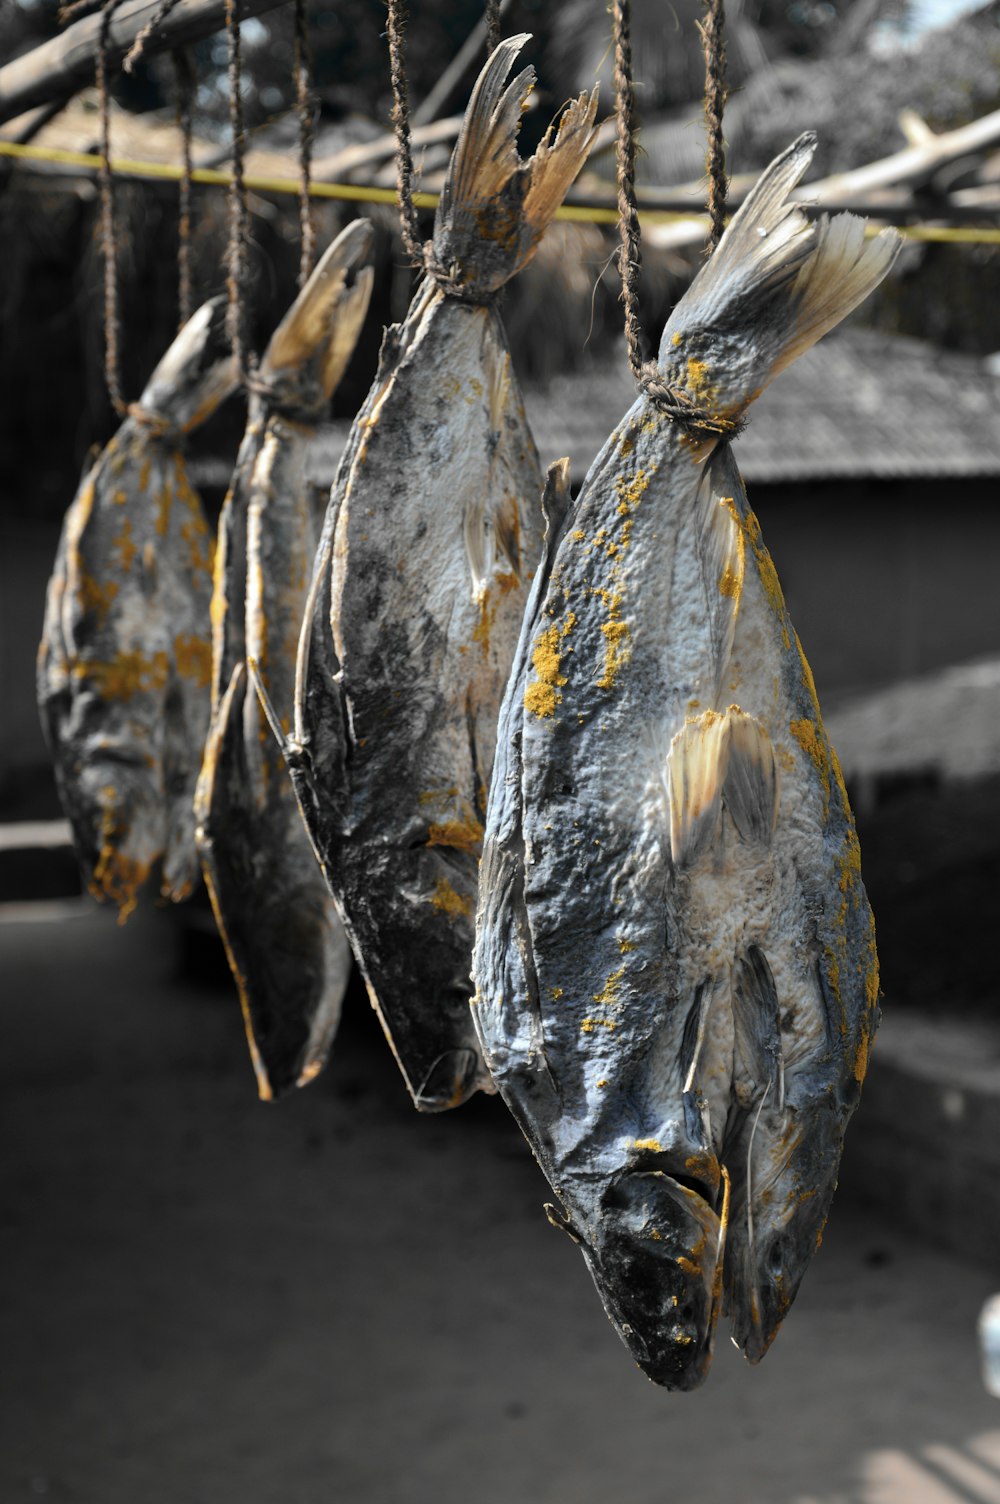 hung dried fish